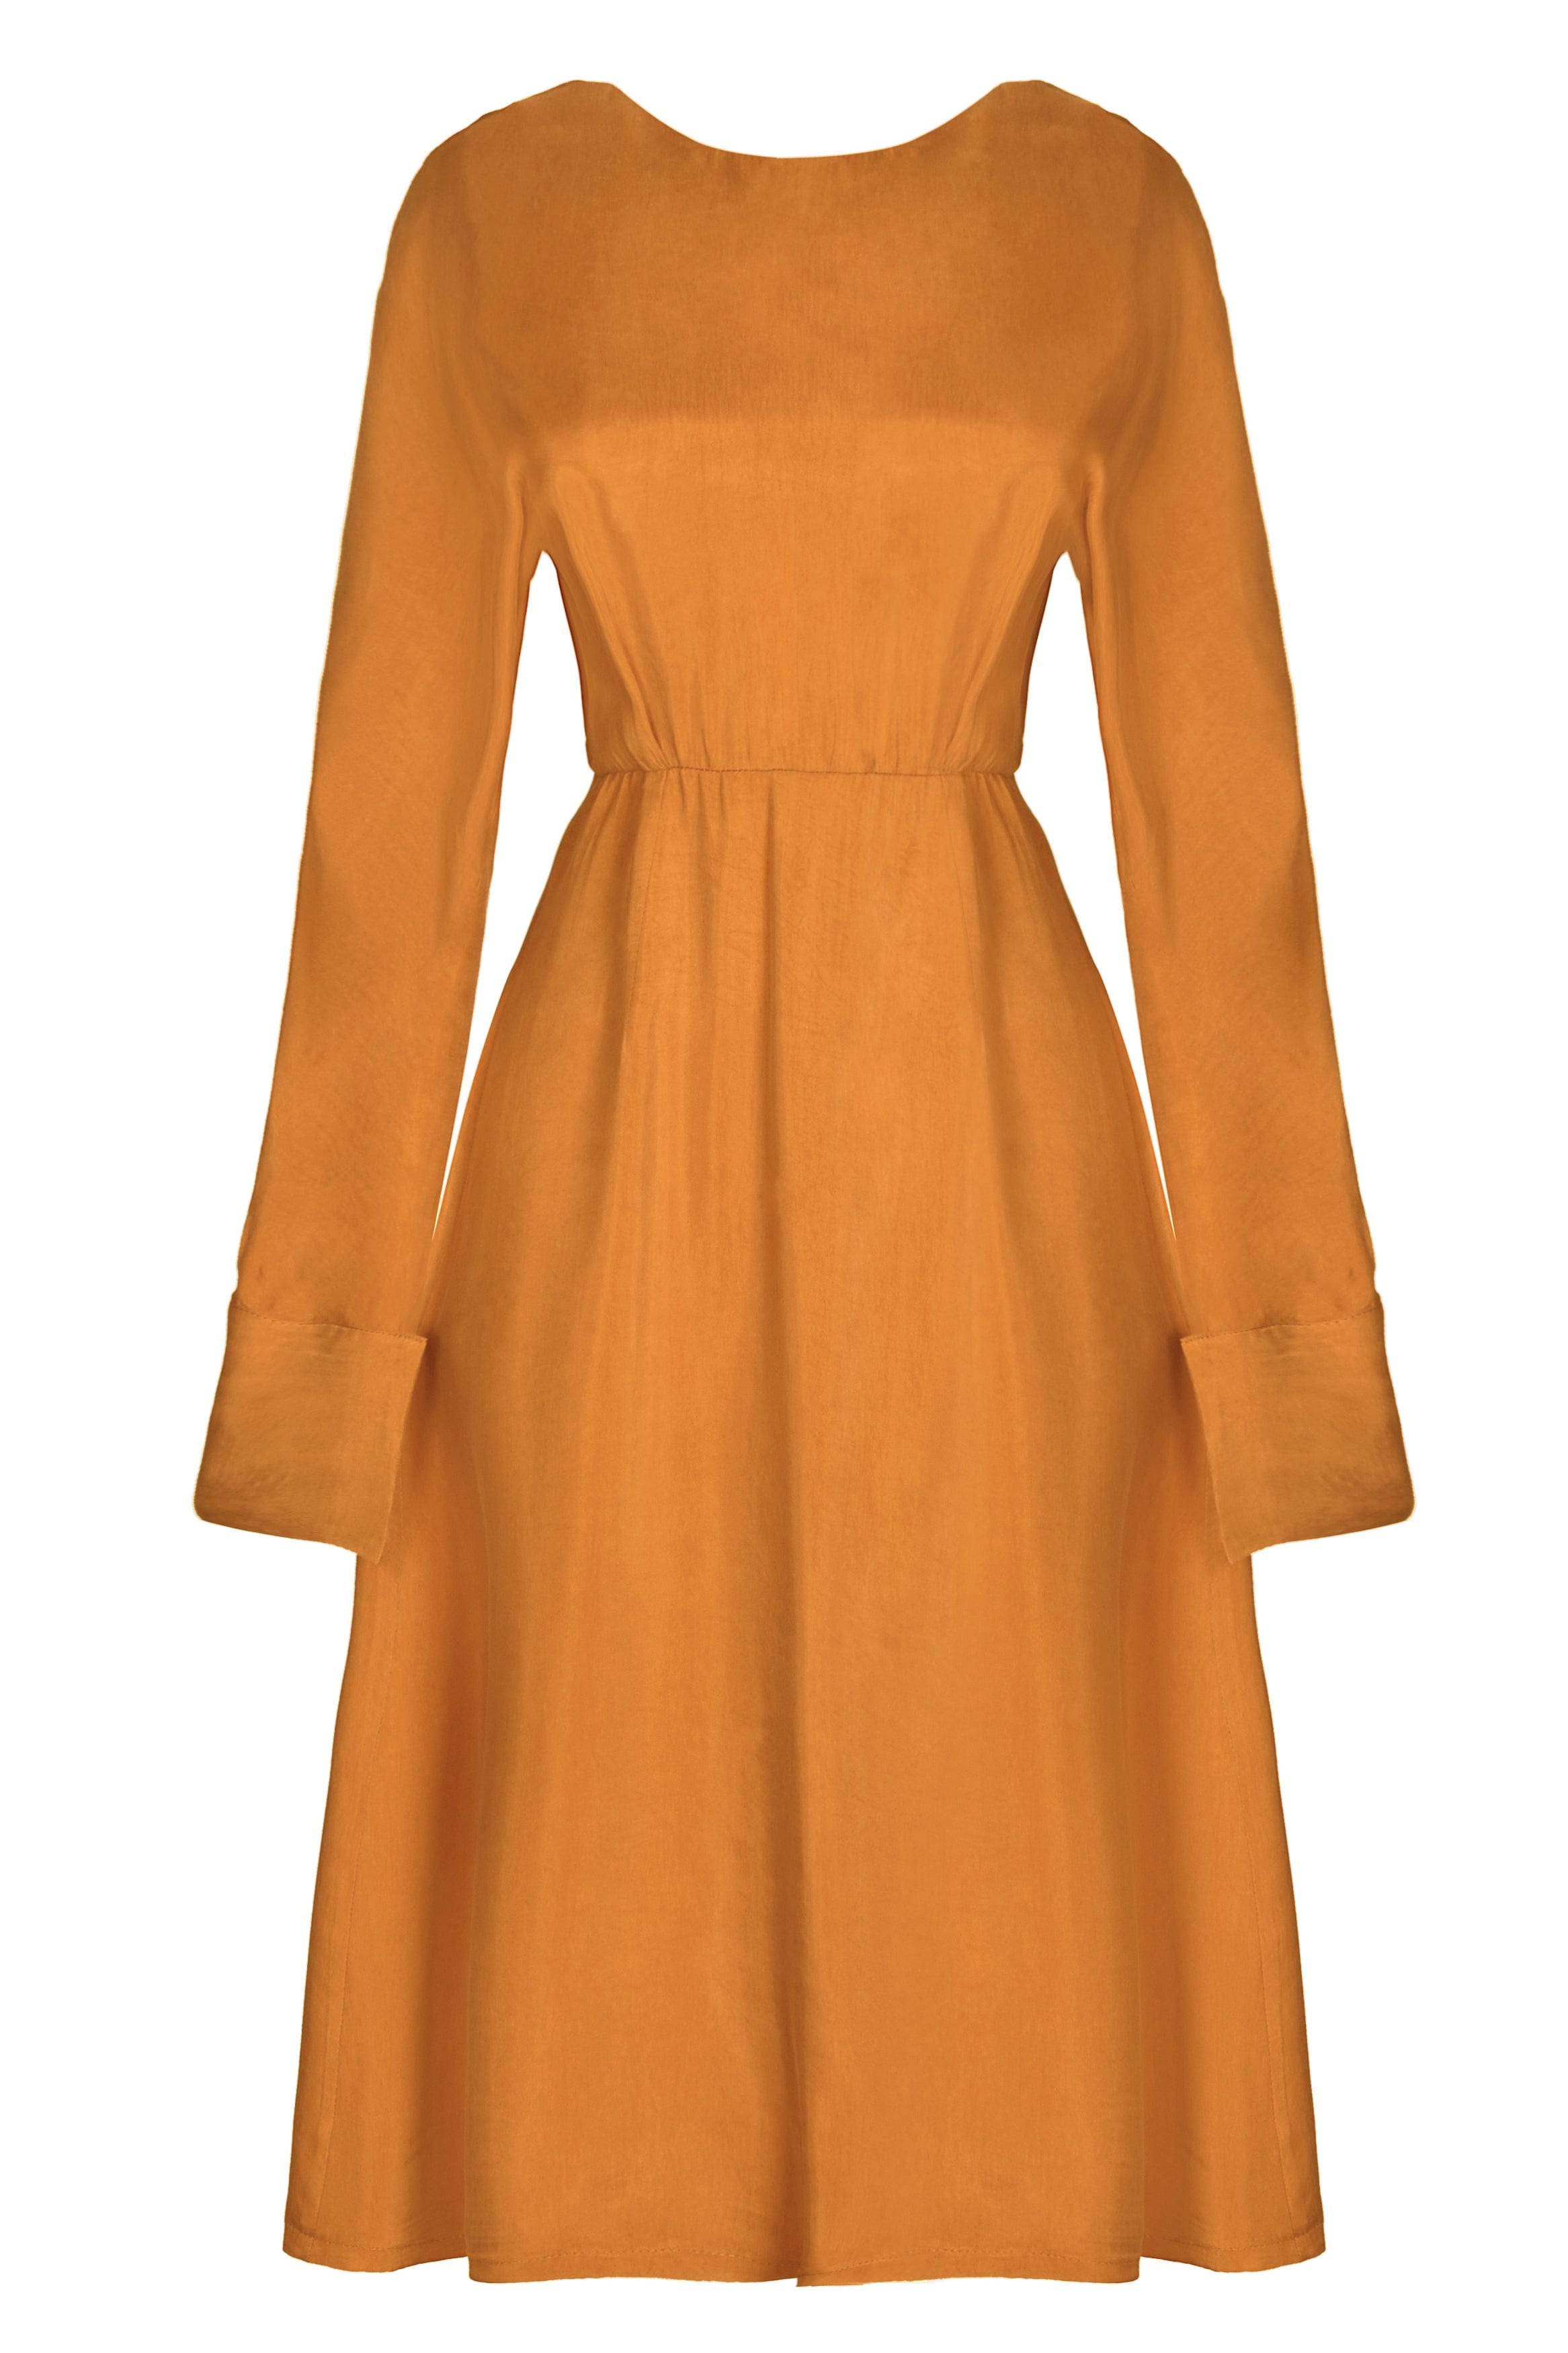 Women’s Gold / Yellow / Orange Mustard Yellow Dress Small Sarvin